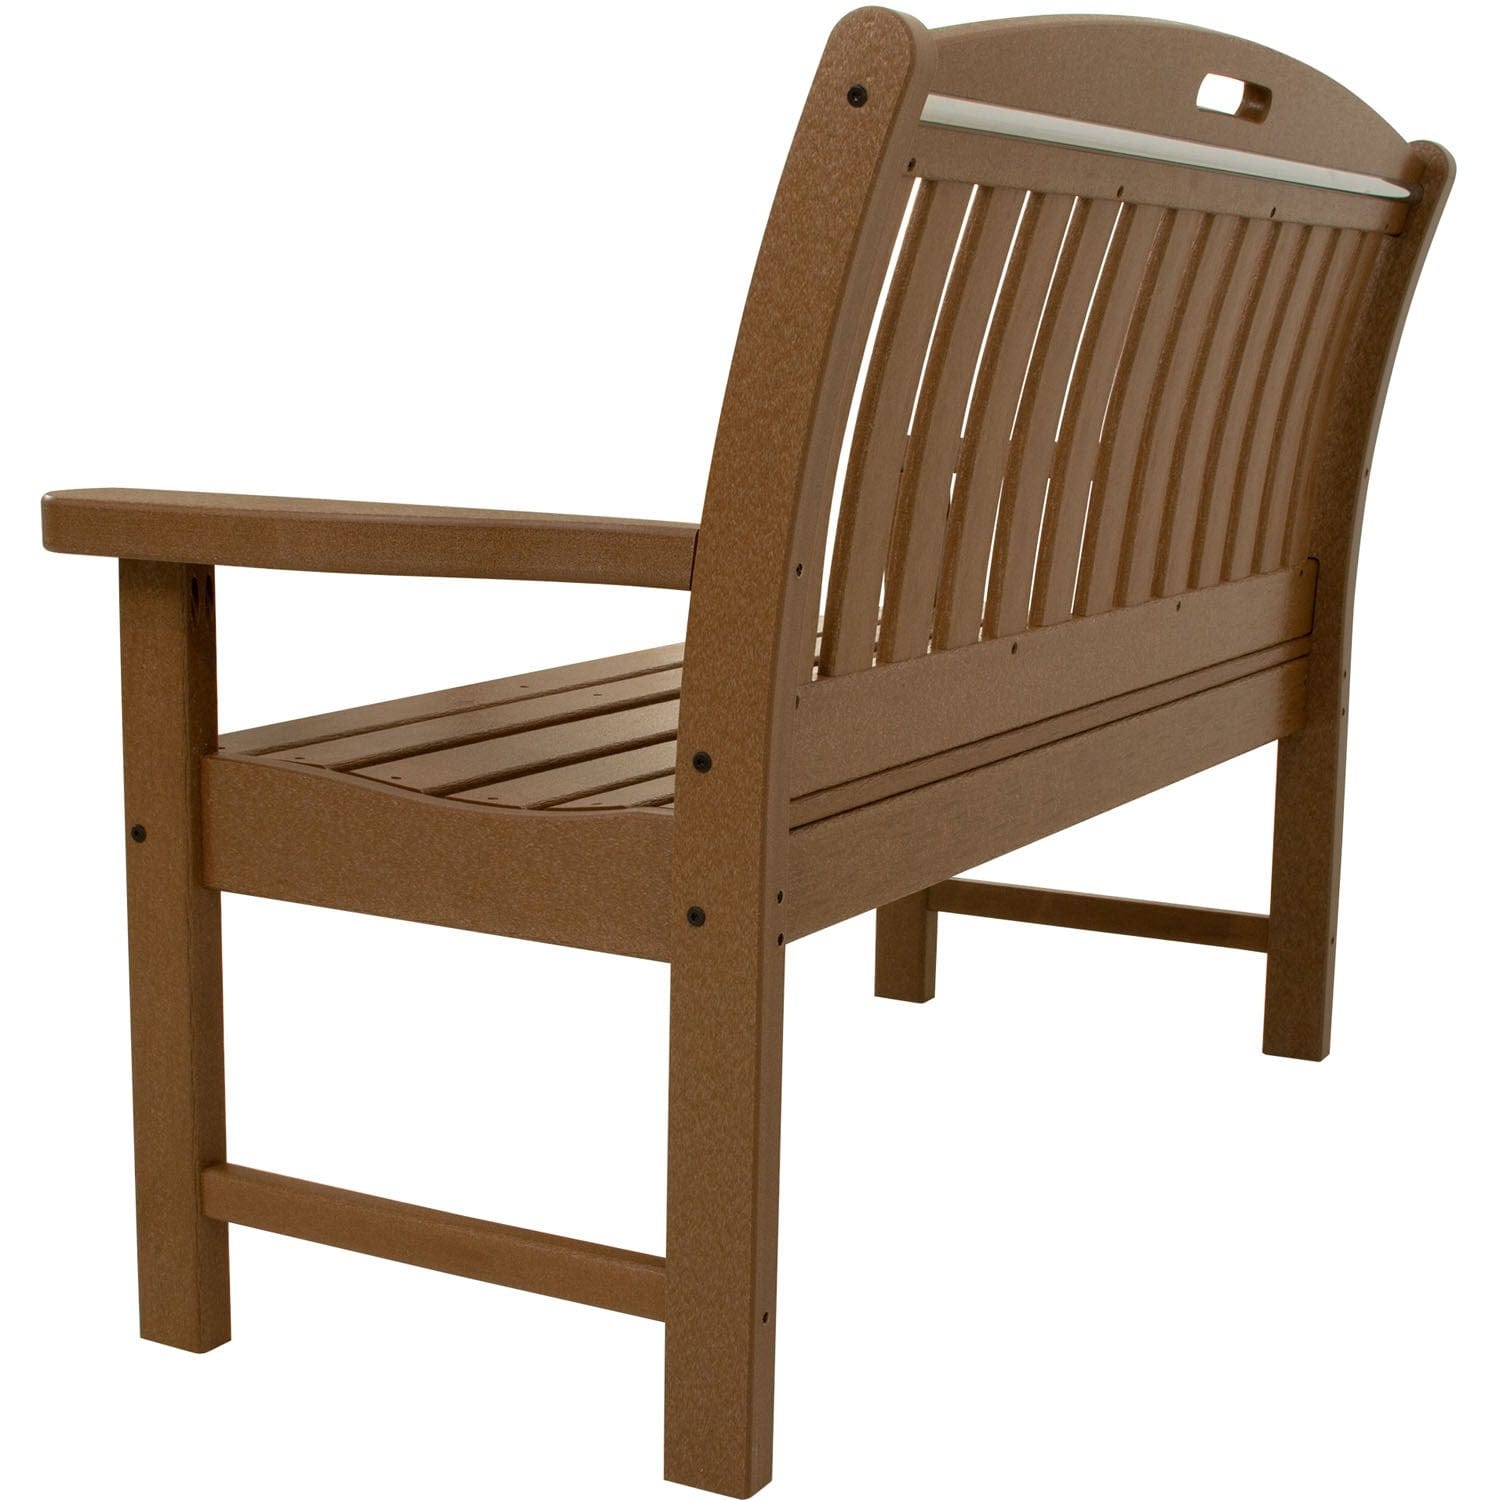 Hanover Outdoor Bench Hanover - Outdoor Furniture HVNB48TE Avalon All Weather Porch Bench, 48", Teak | HVNB48TE